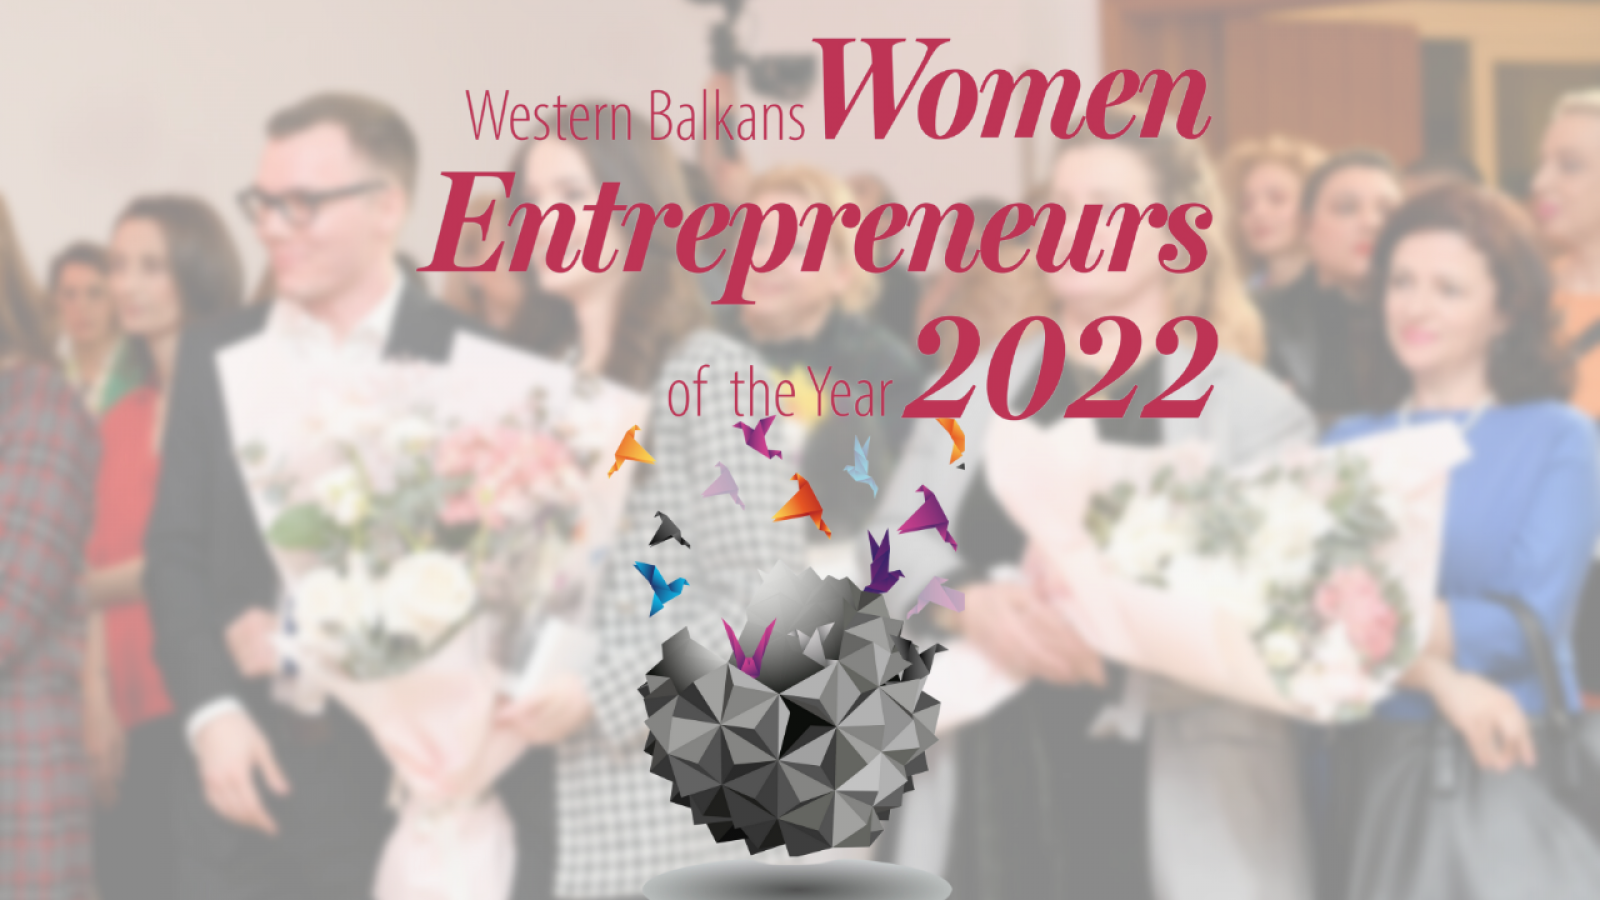 Western Balkans Women Entrepreneurs of the year 2022